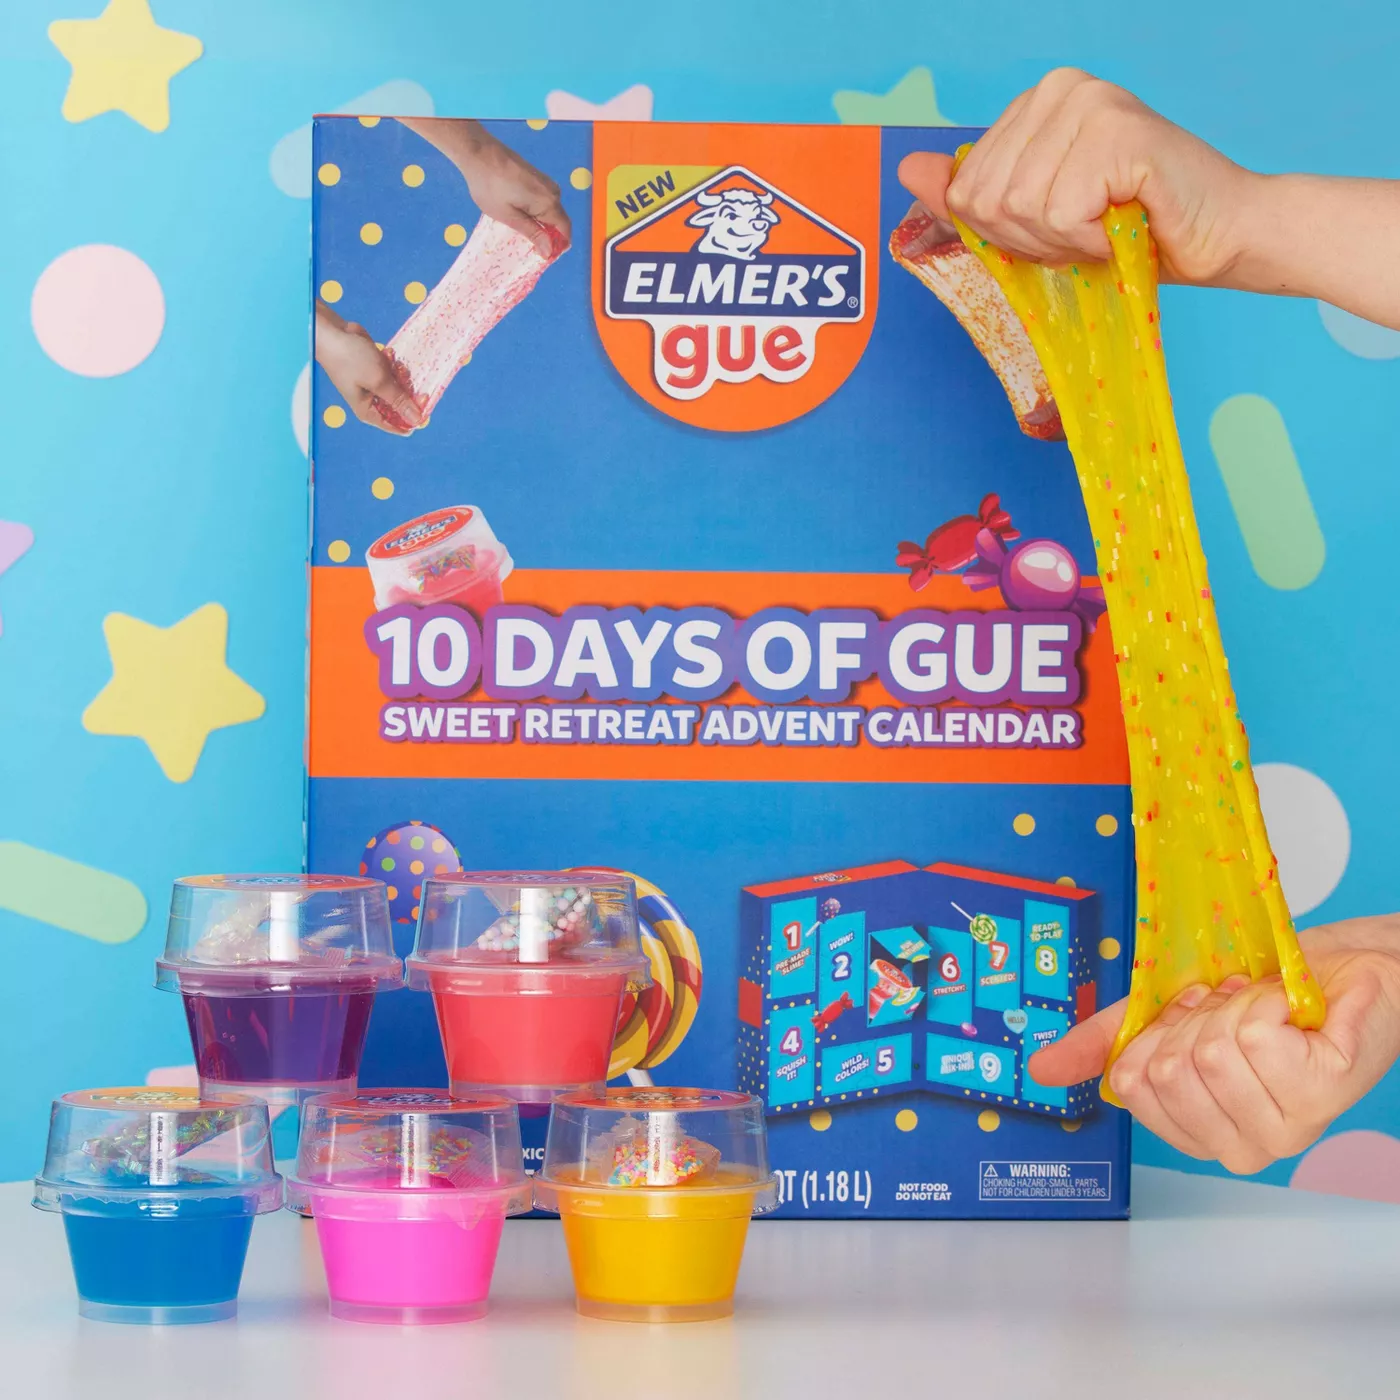 Elmer's Gue Slime Advent Calendar: 10 Days of Gue! - Hello Subscription